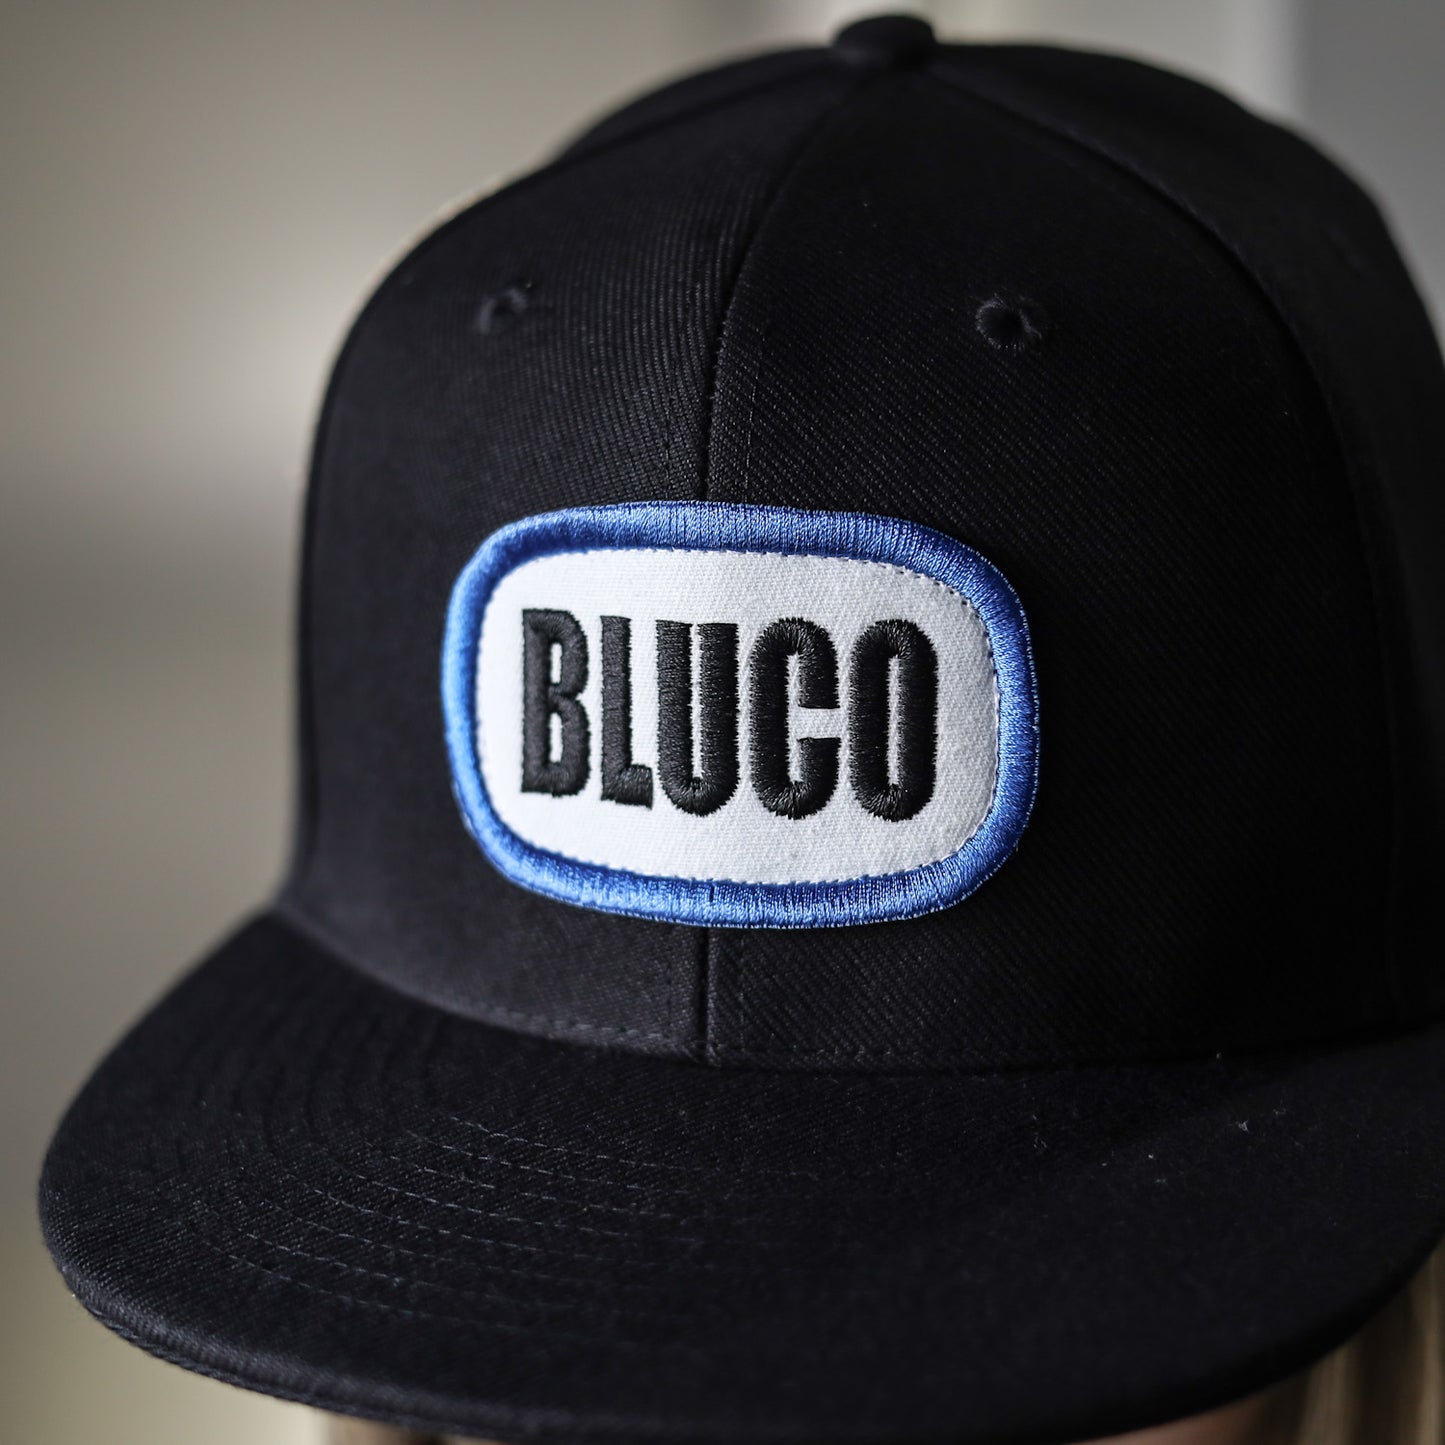 BLUCO / 6-PANEL CAP -PATCH- (BLACK)